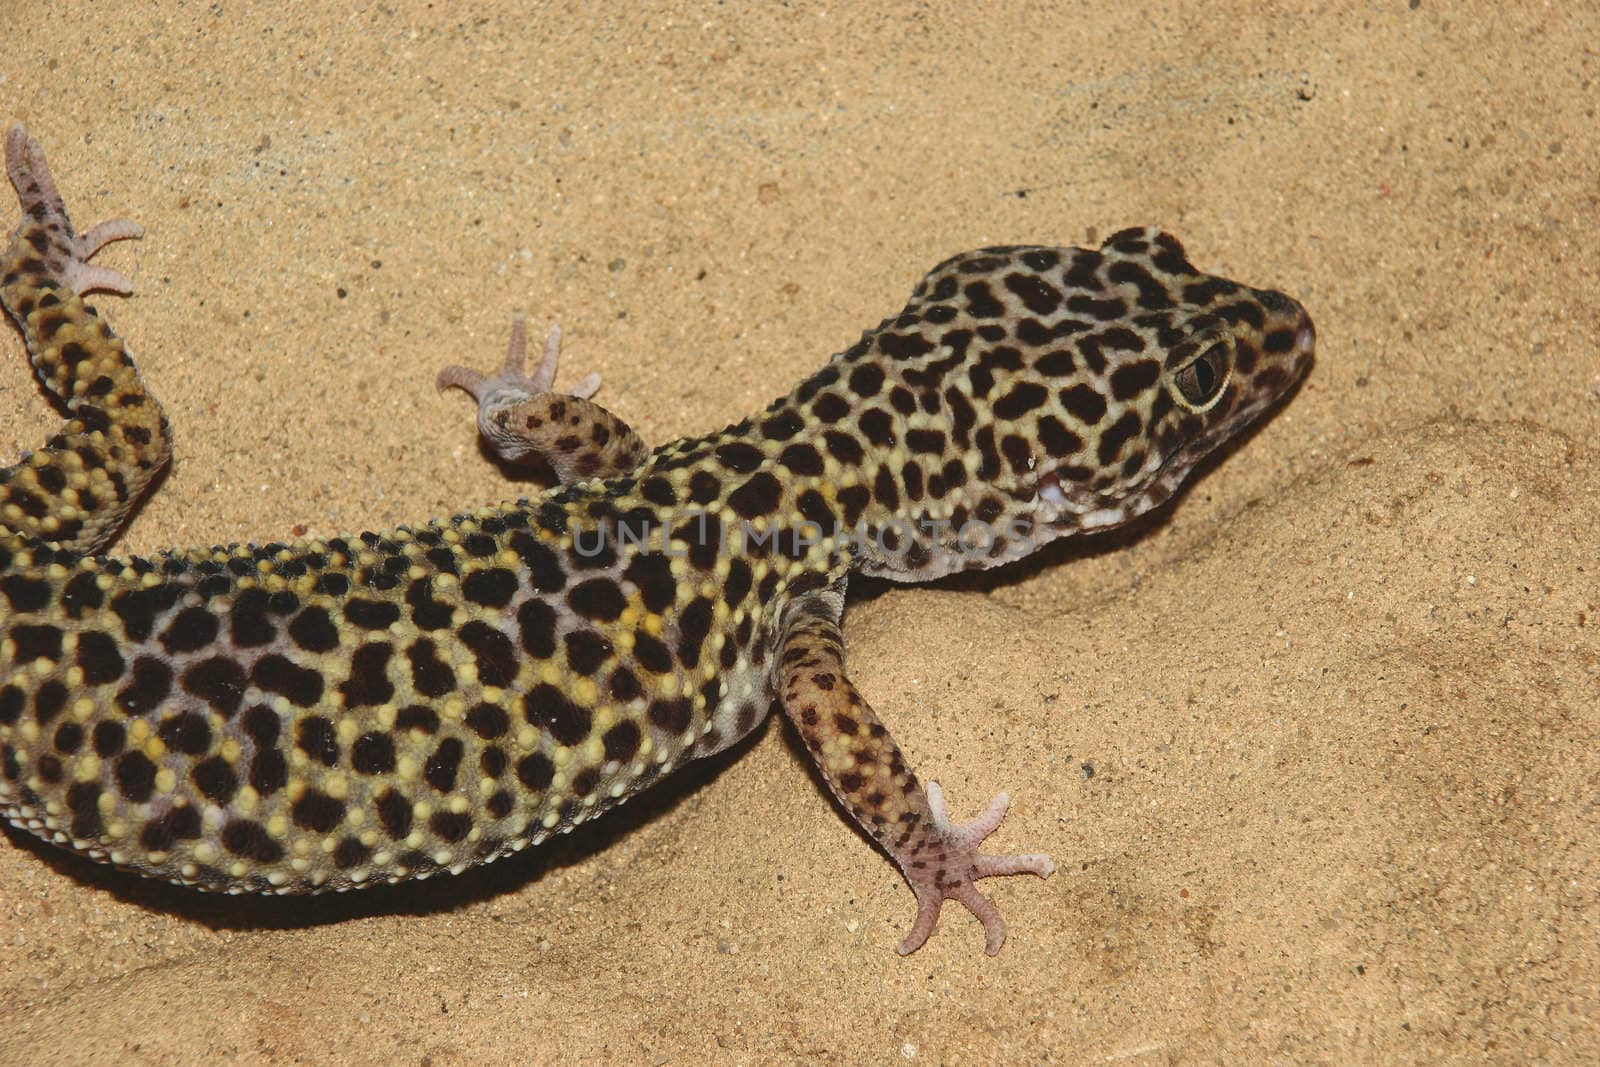 Leopard gecko (Eublepharis macularius) by tdietrich